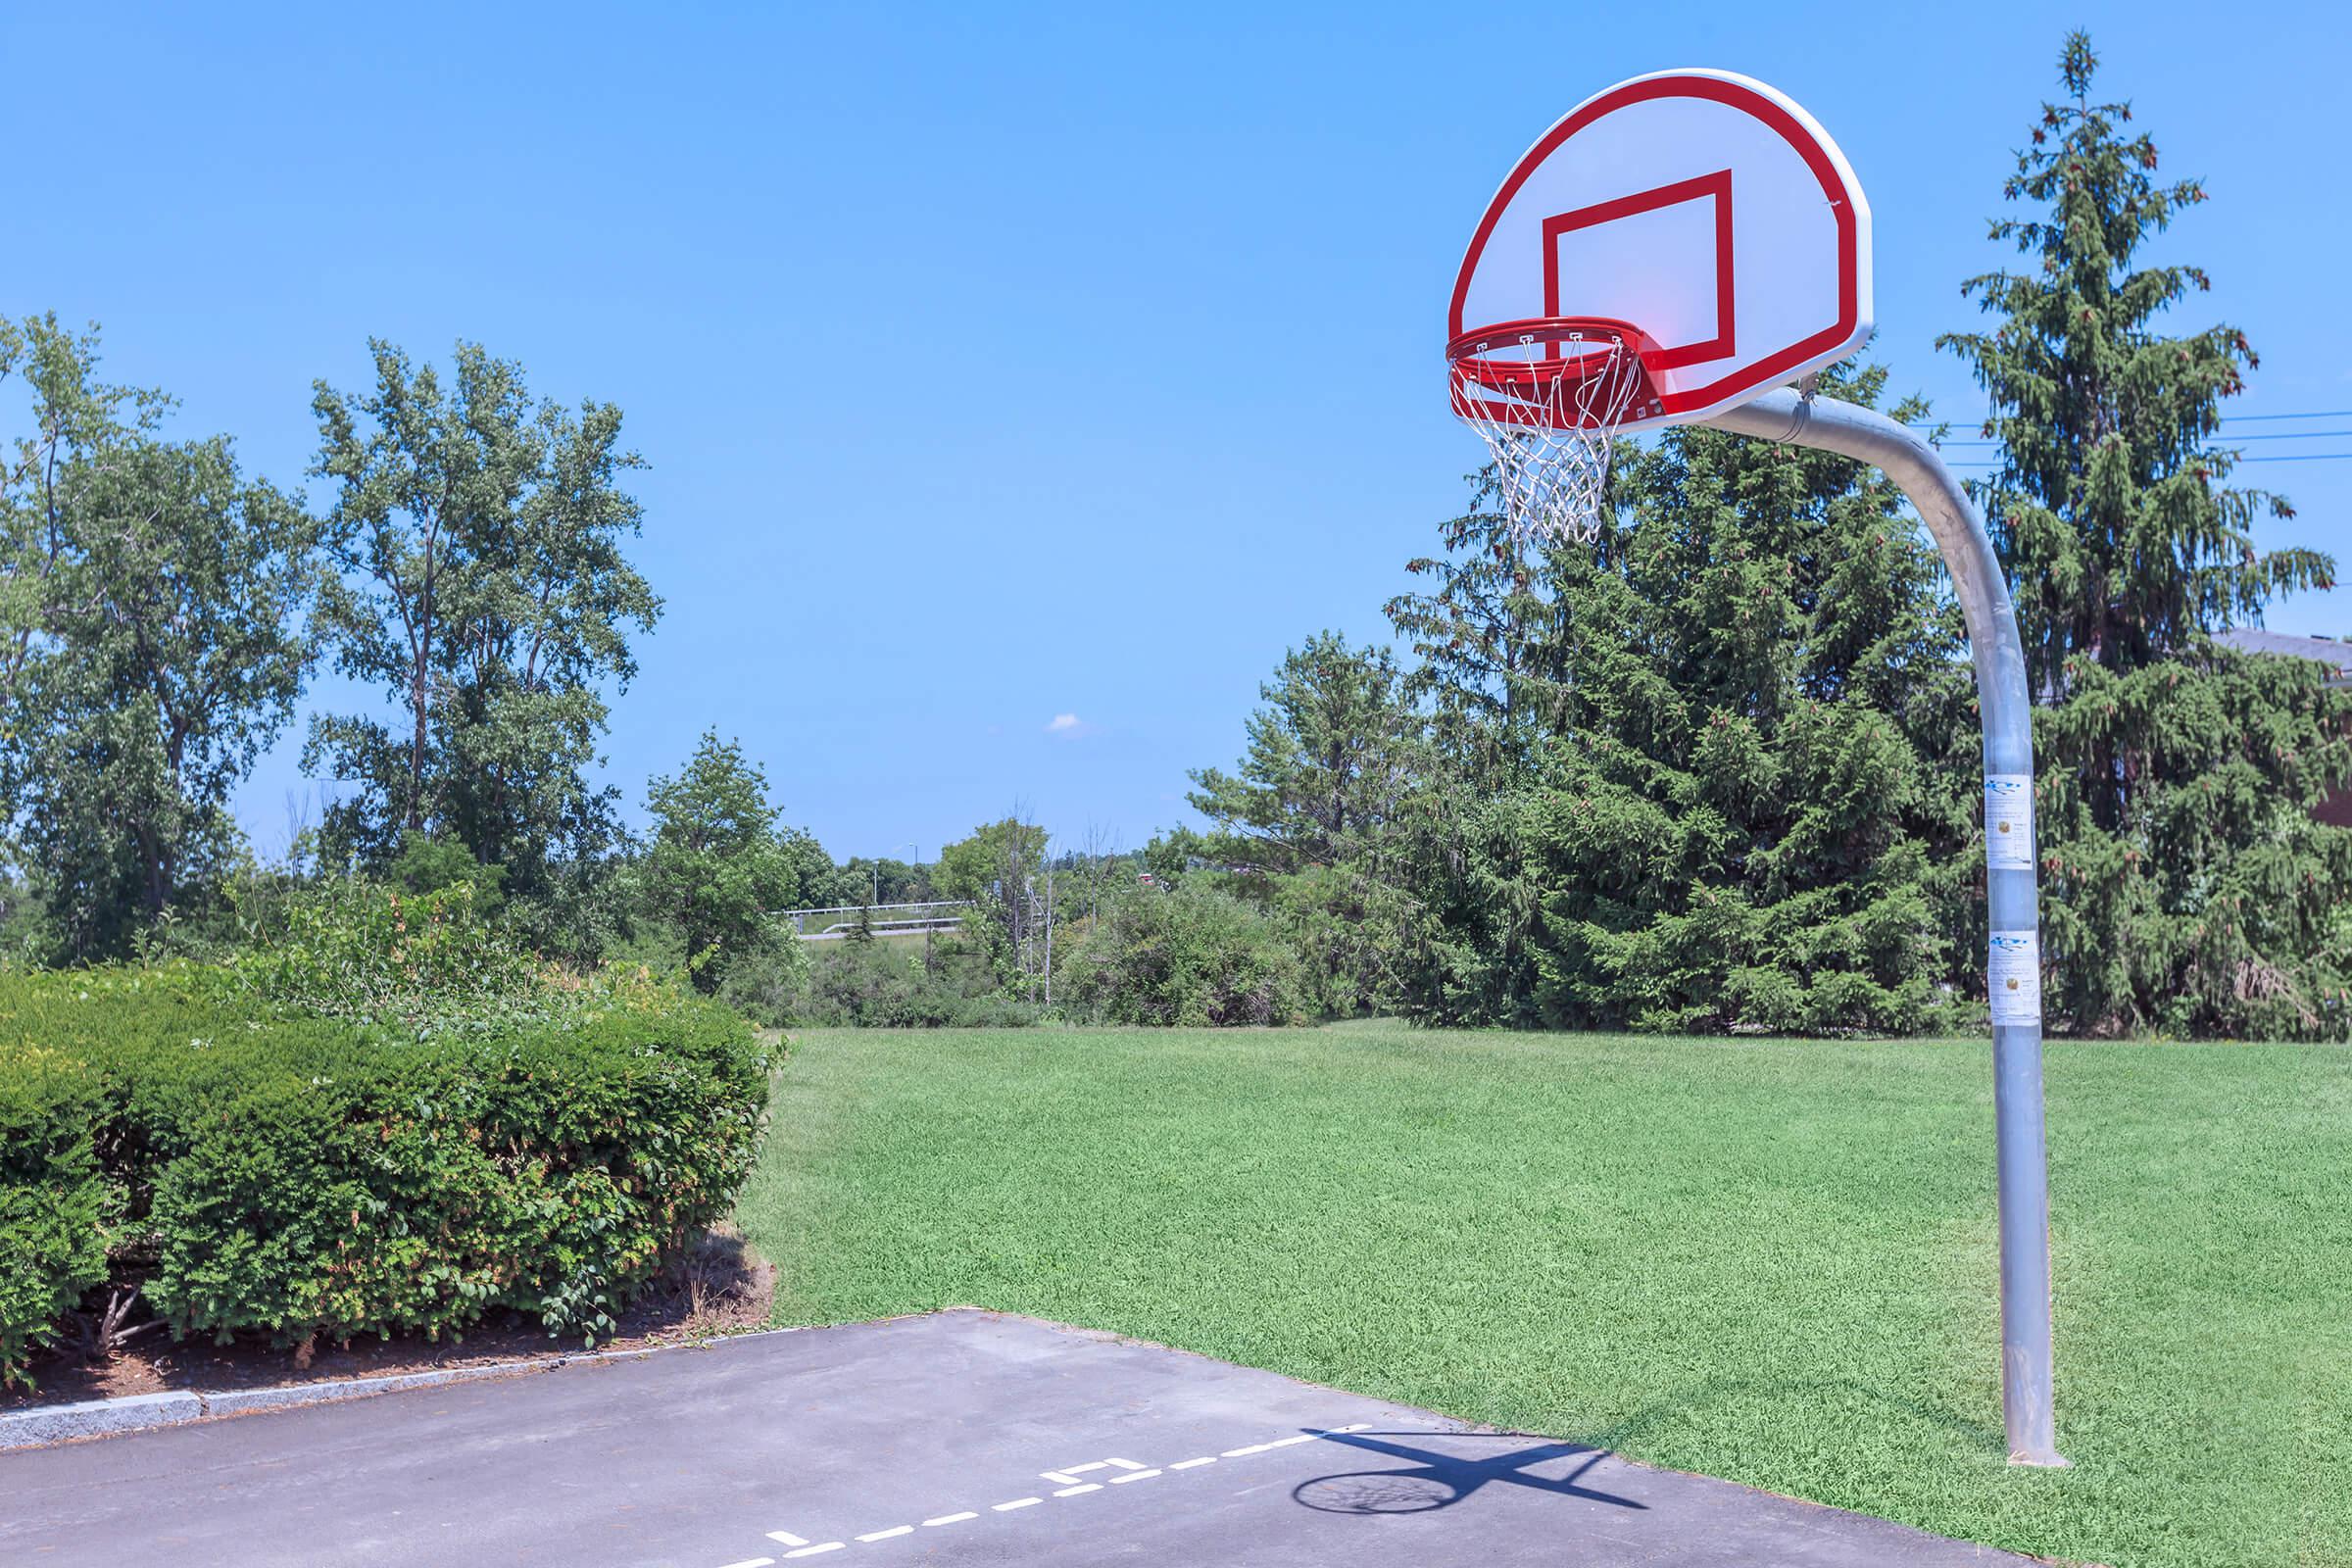 a close up of a basketball hoop